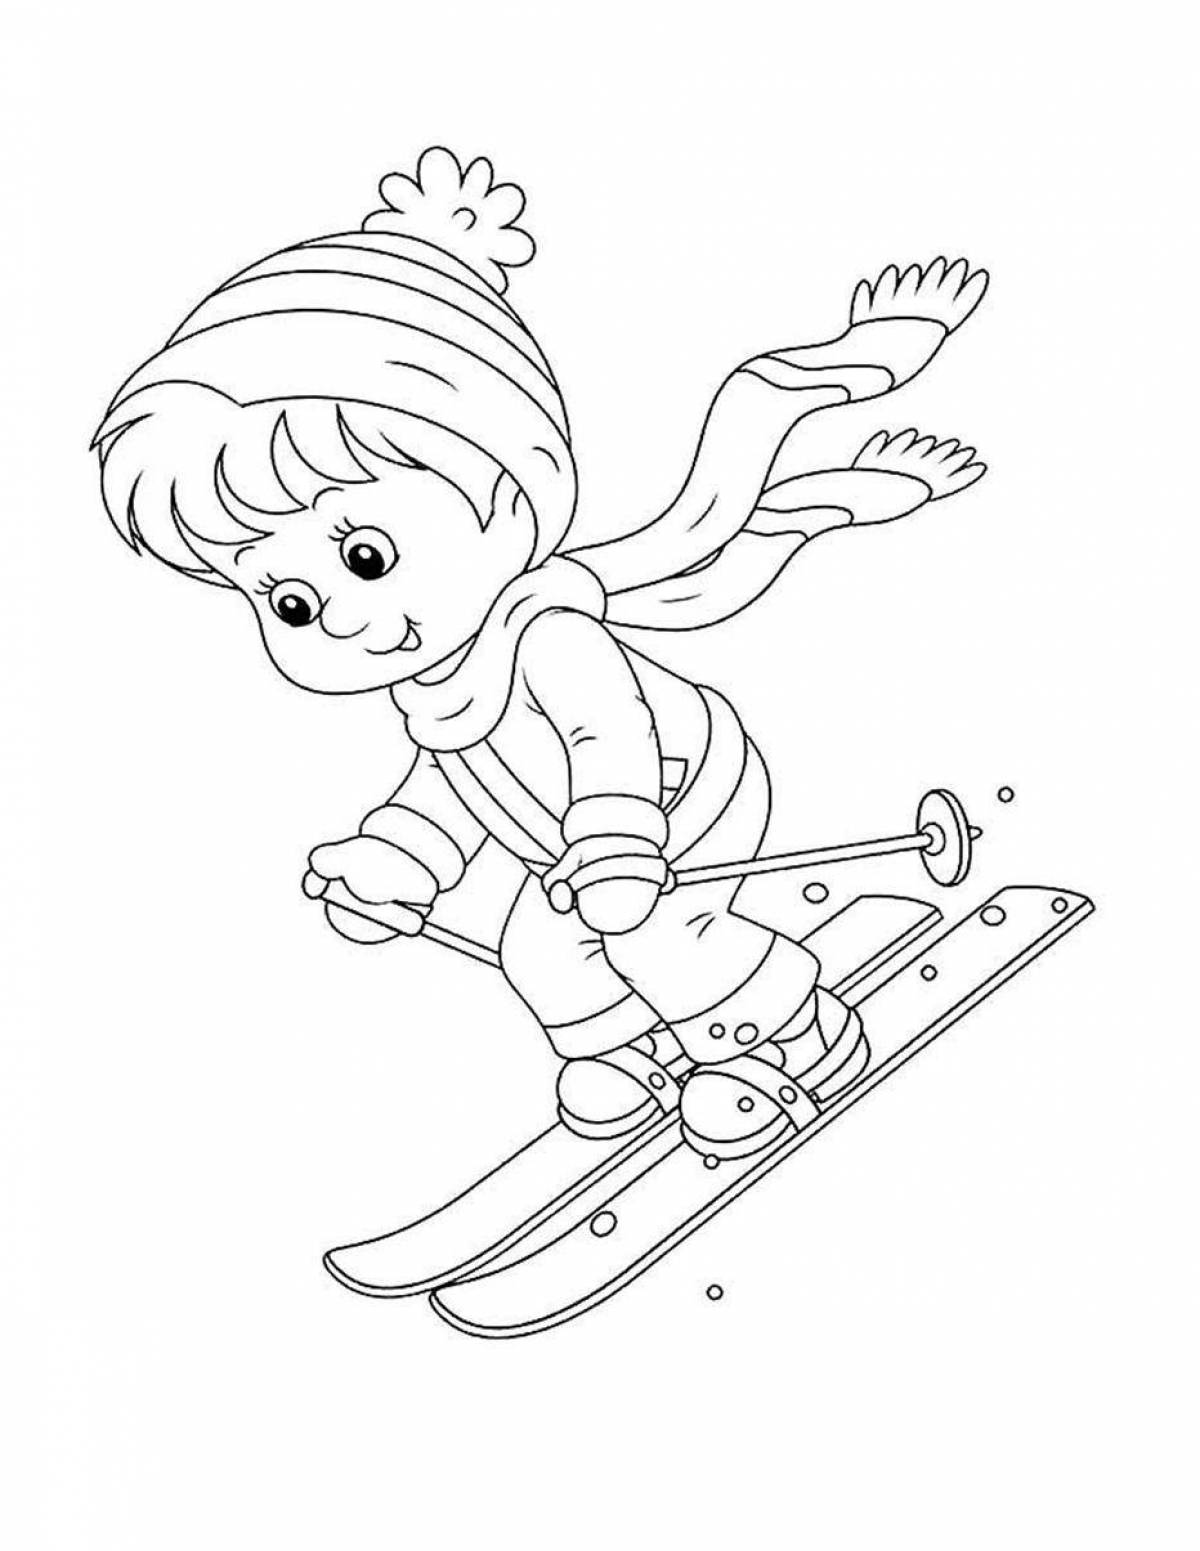 Joyful coloring book for children on skis